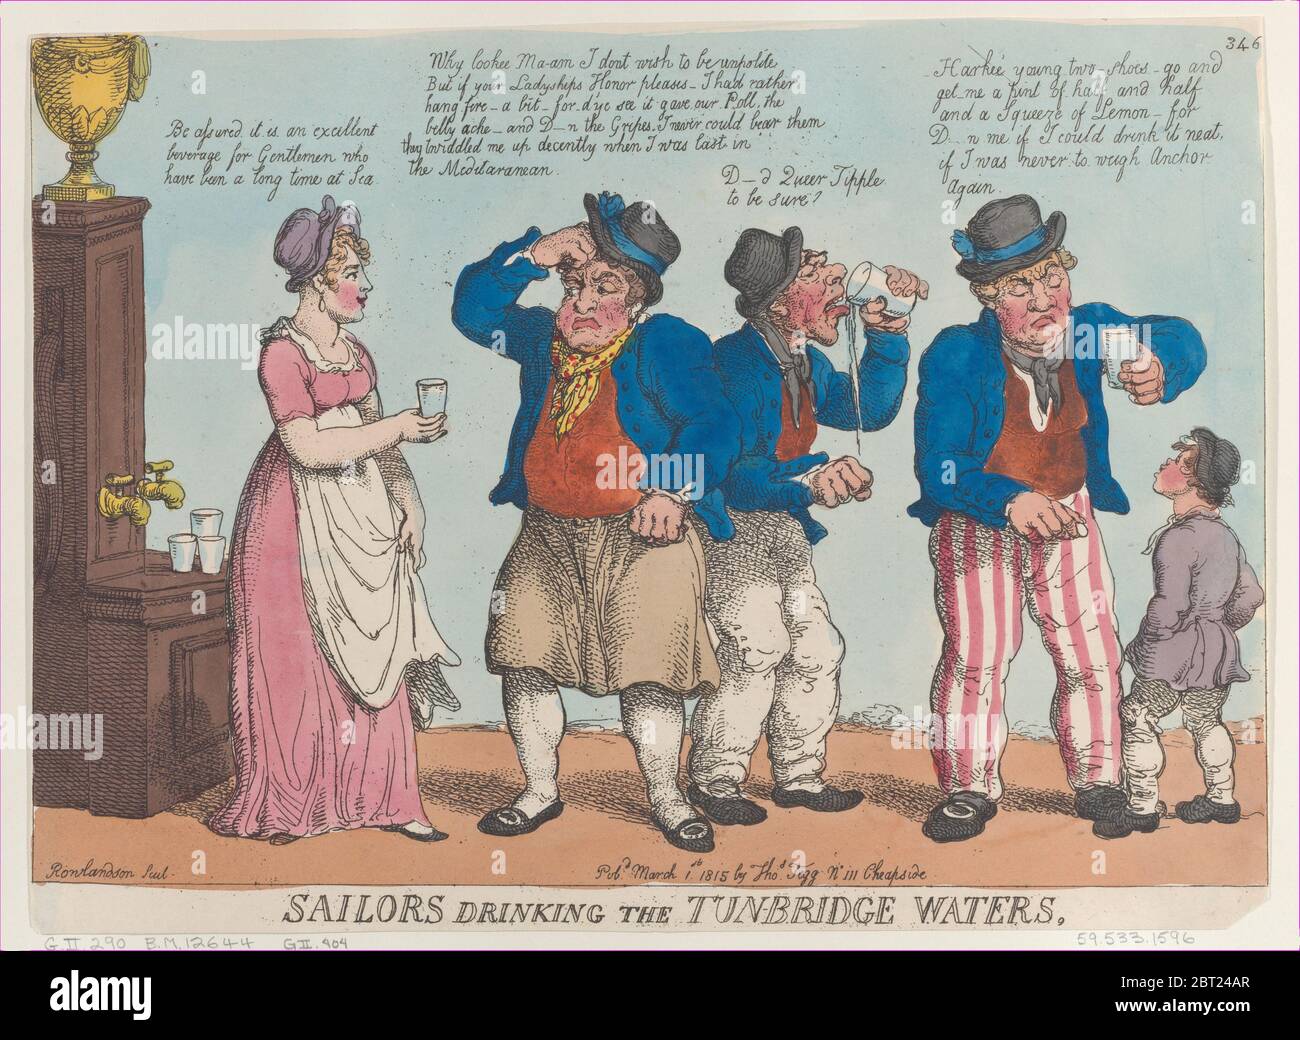 Sailors Drinking the Tunbridge Waters, March 1, 1815. Stock Photo